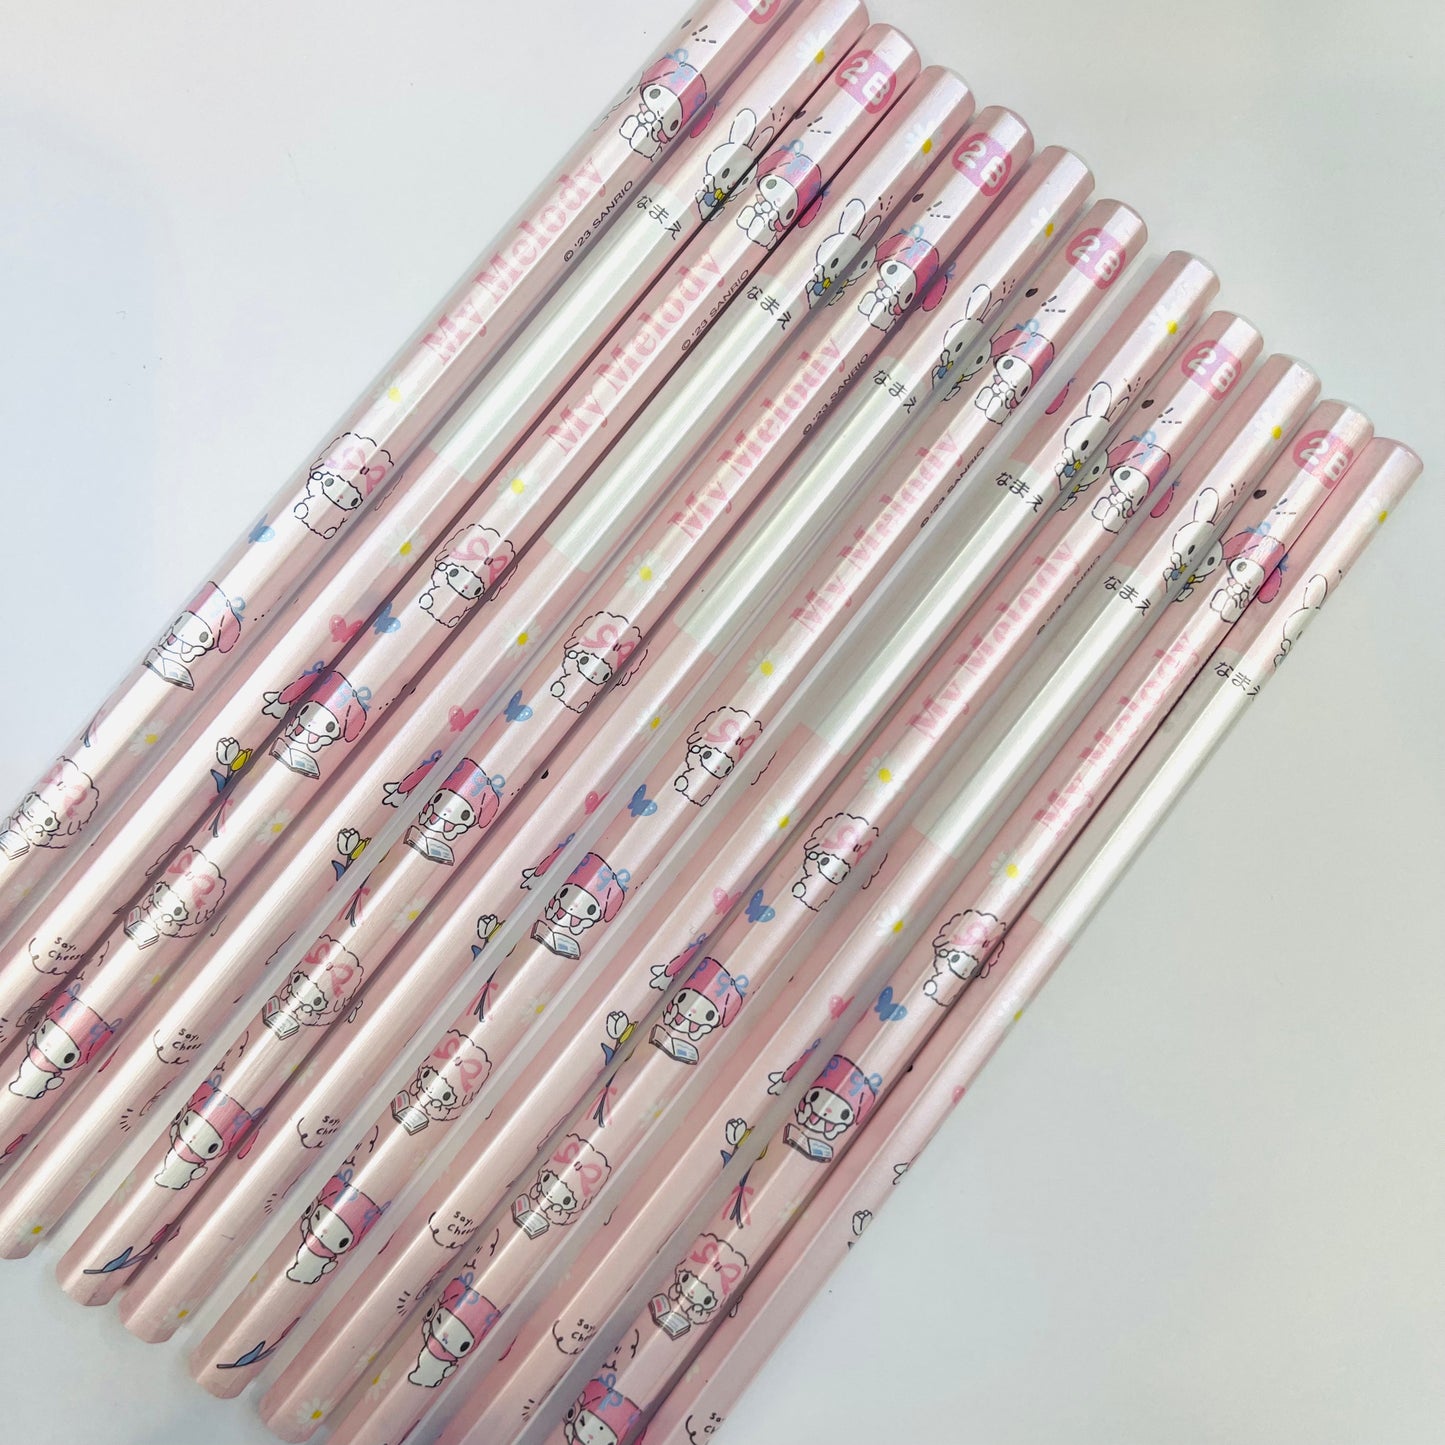 Sanrio 12pcs 2B Pencil Set